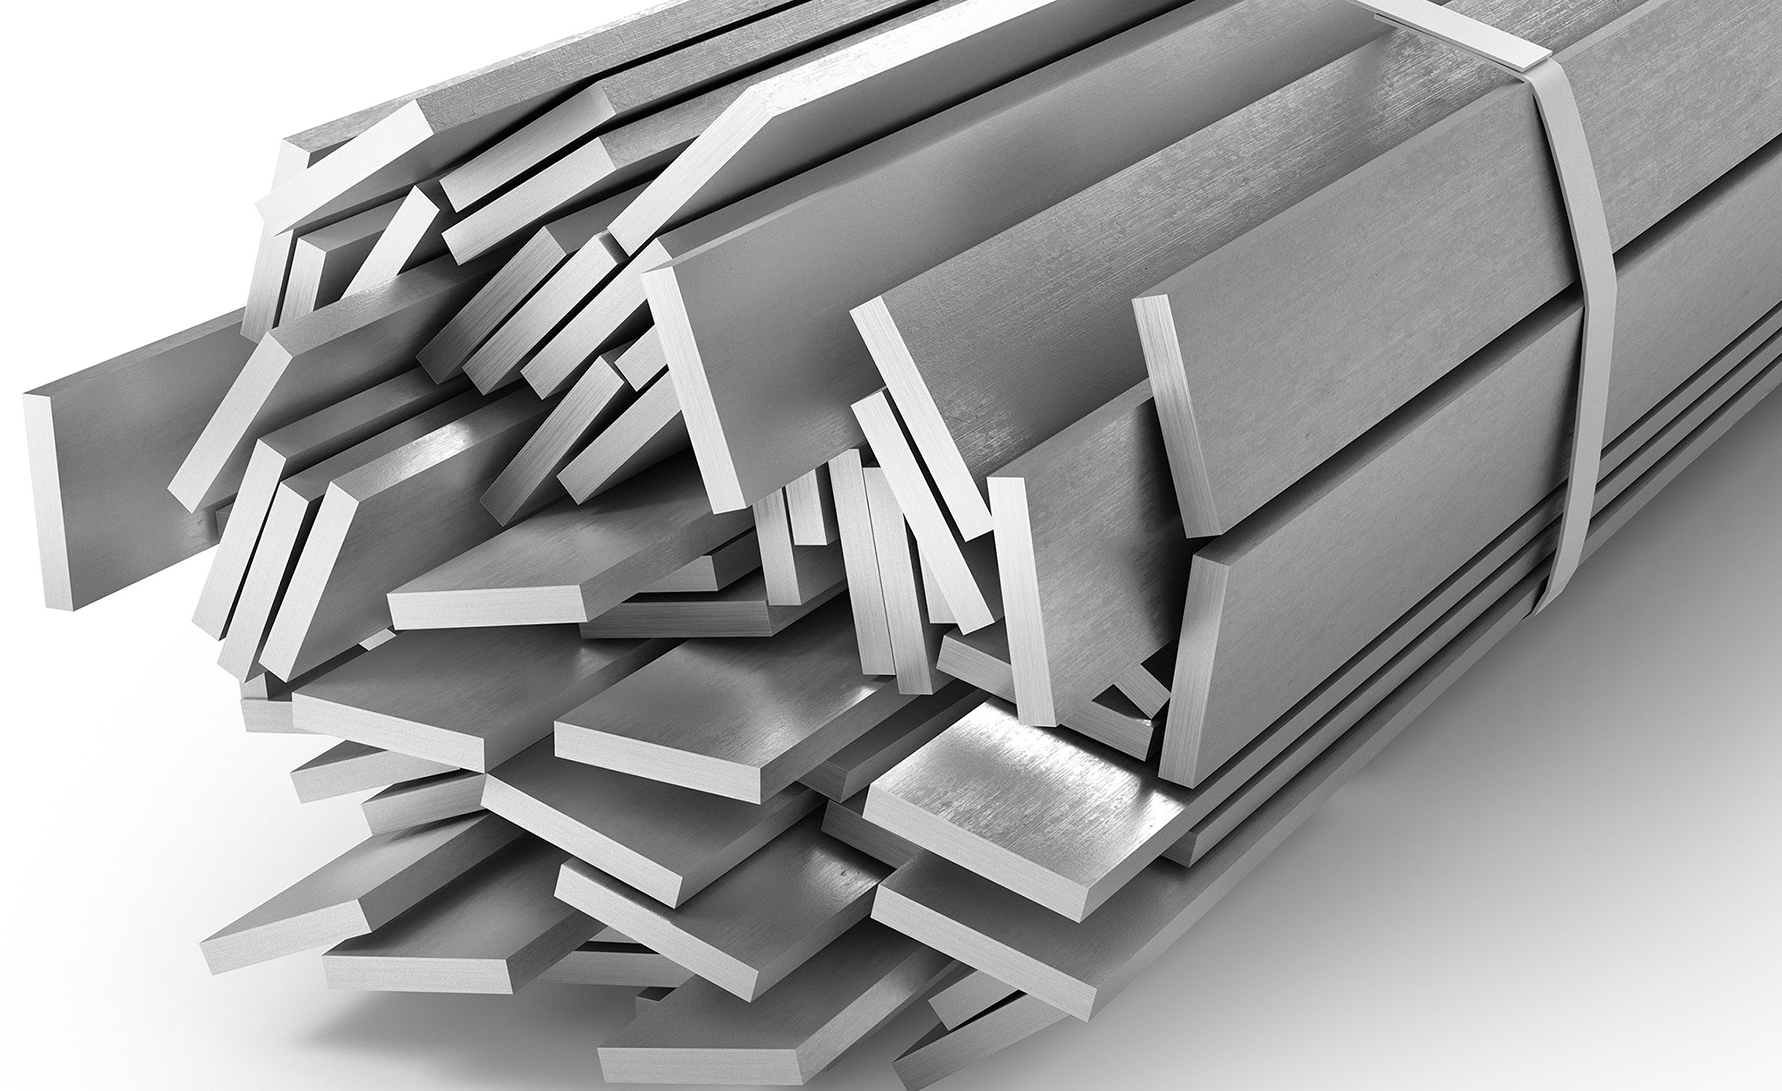 10mm Thk Mild Steel Plate Metal Sheet Flat Bar Fitting 100mm Square 5 6 3 8 